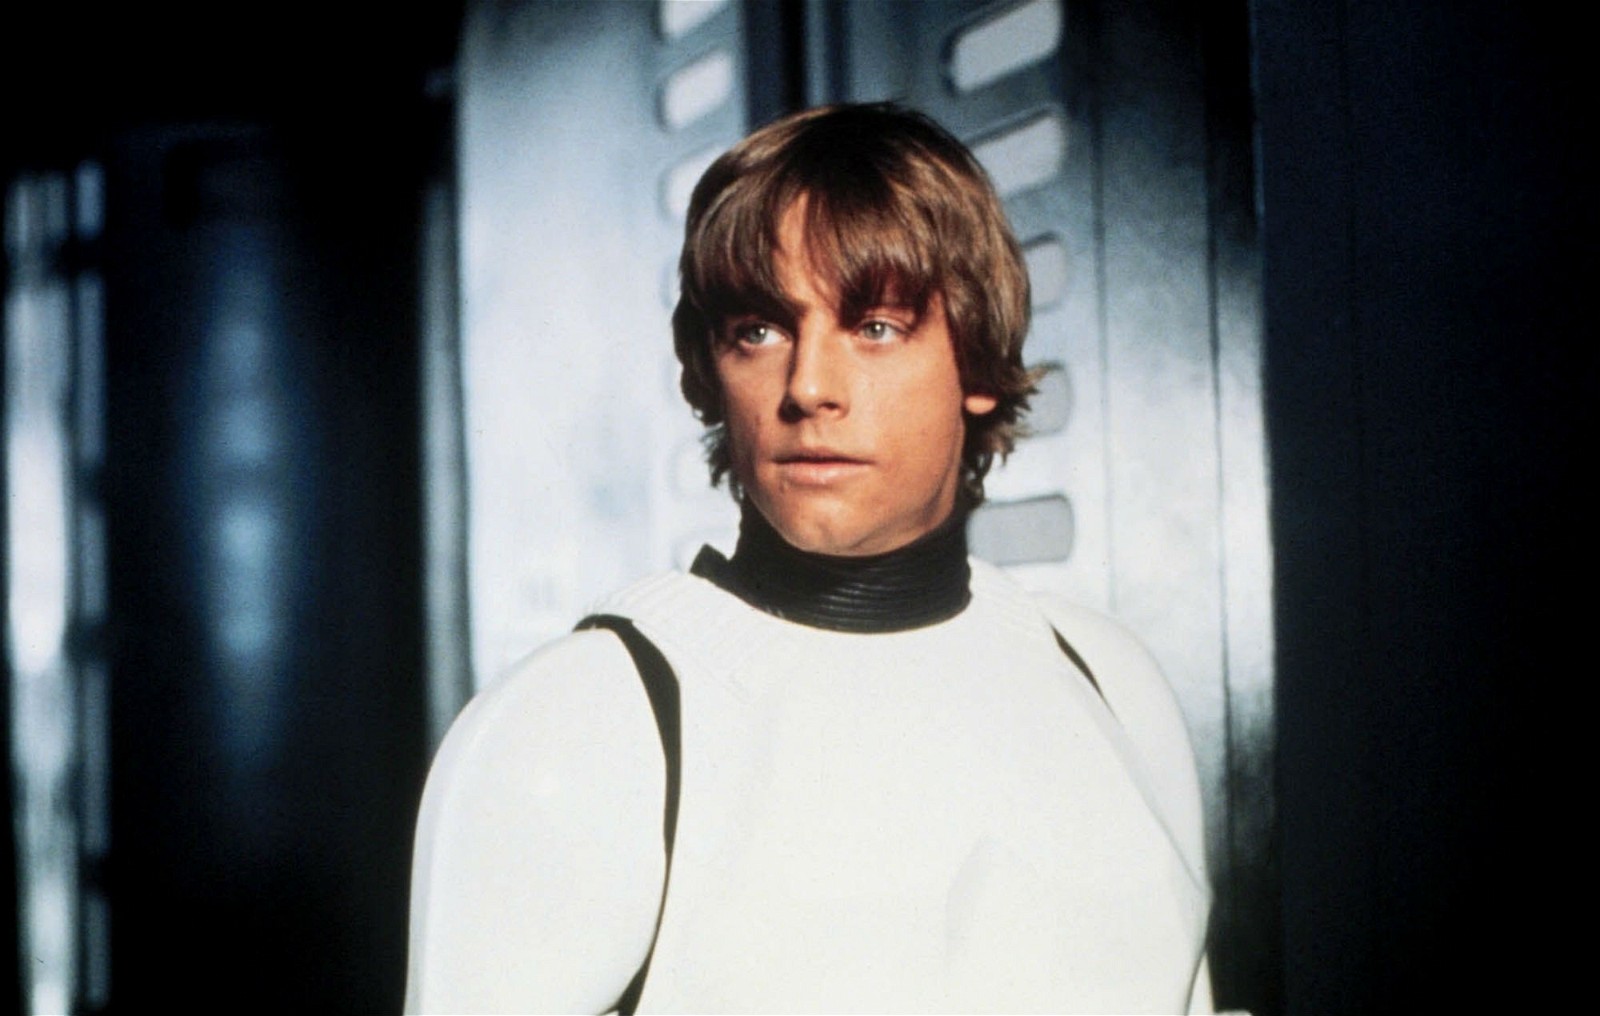 Mark Hamill as Luke Skywalker